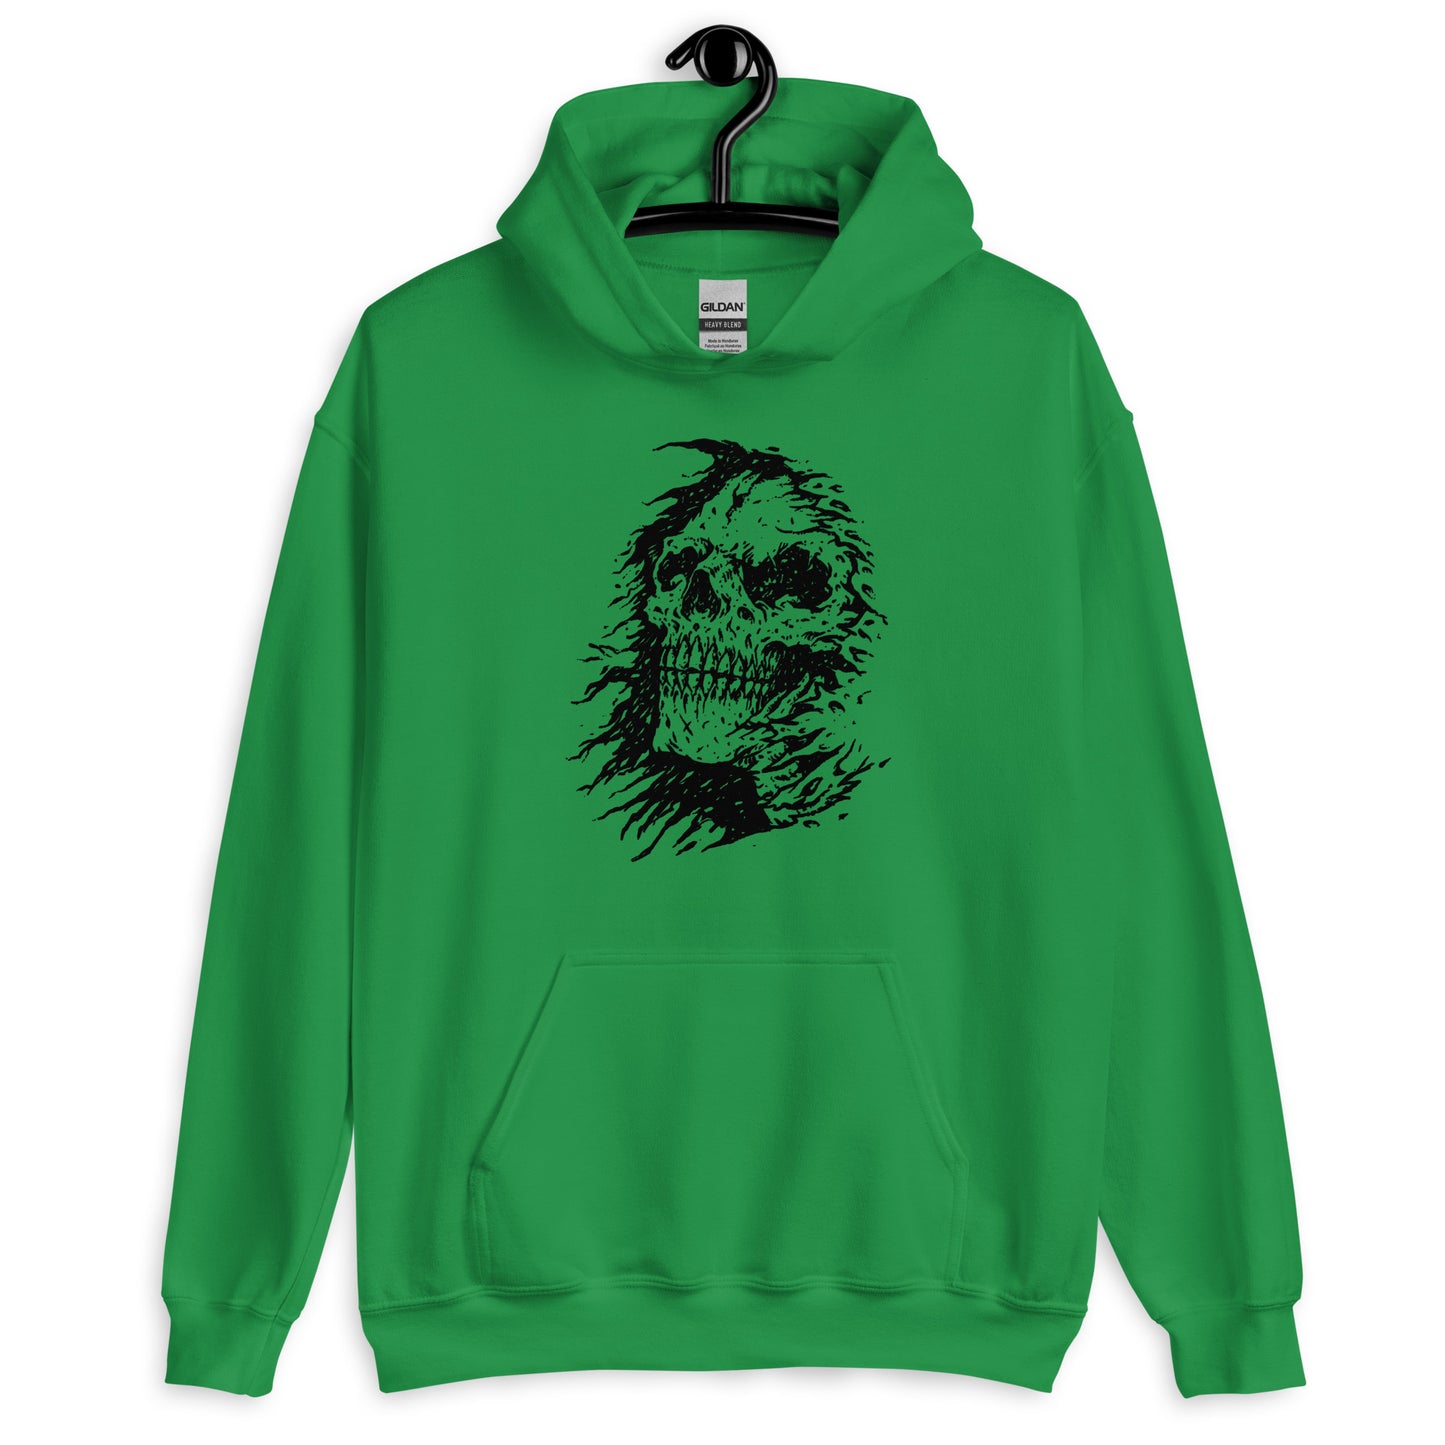 The Grim Reapers Skull Face Hoodie green